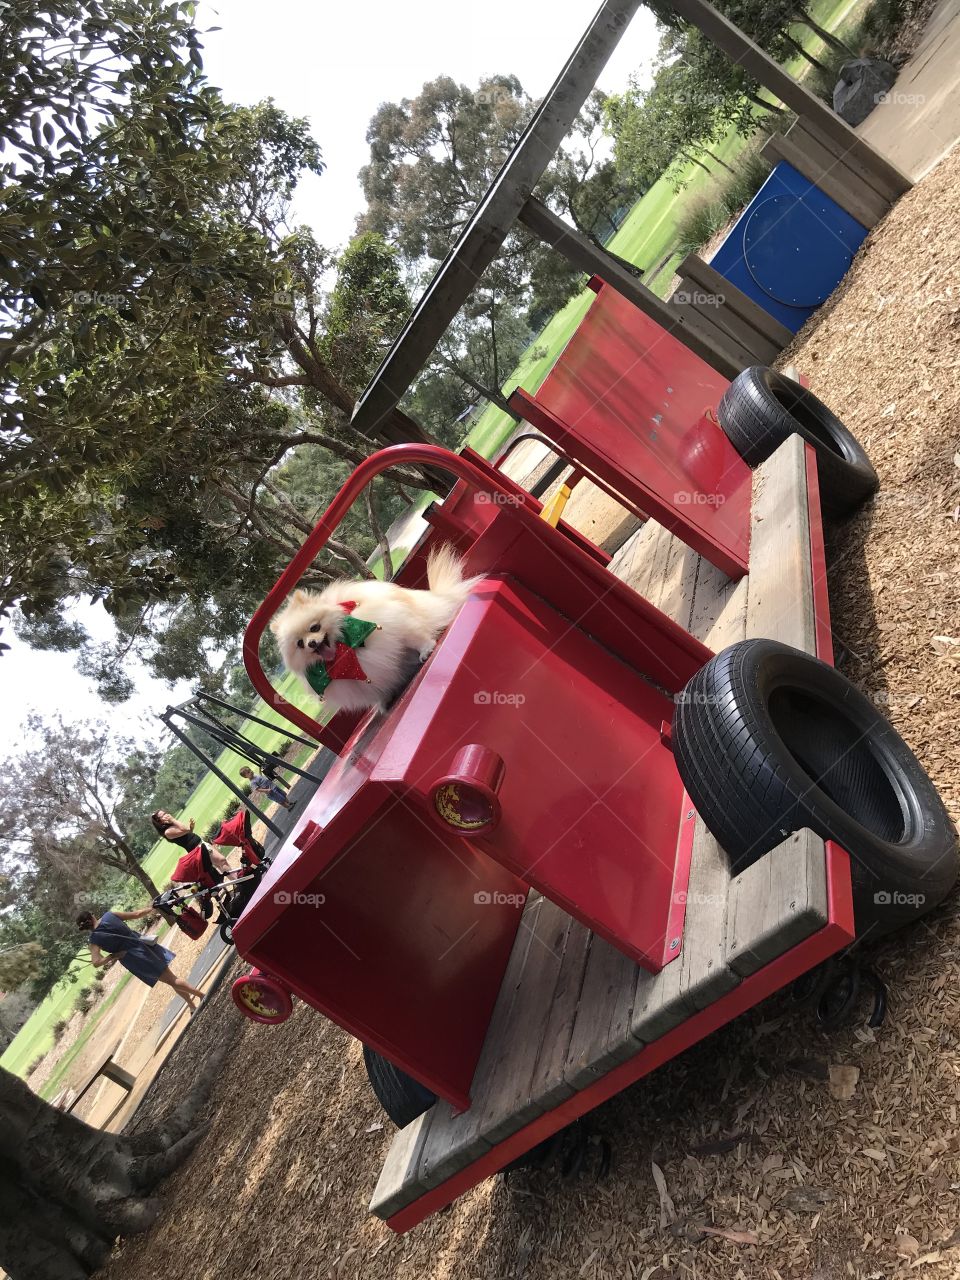 A little Pomerania on the train toy at the park Kingston Cheltenham Melbourne Australia 